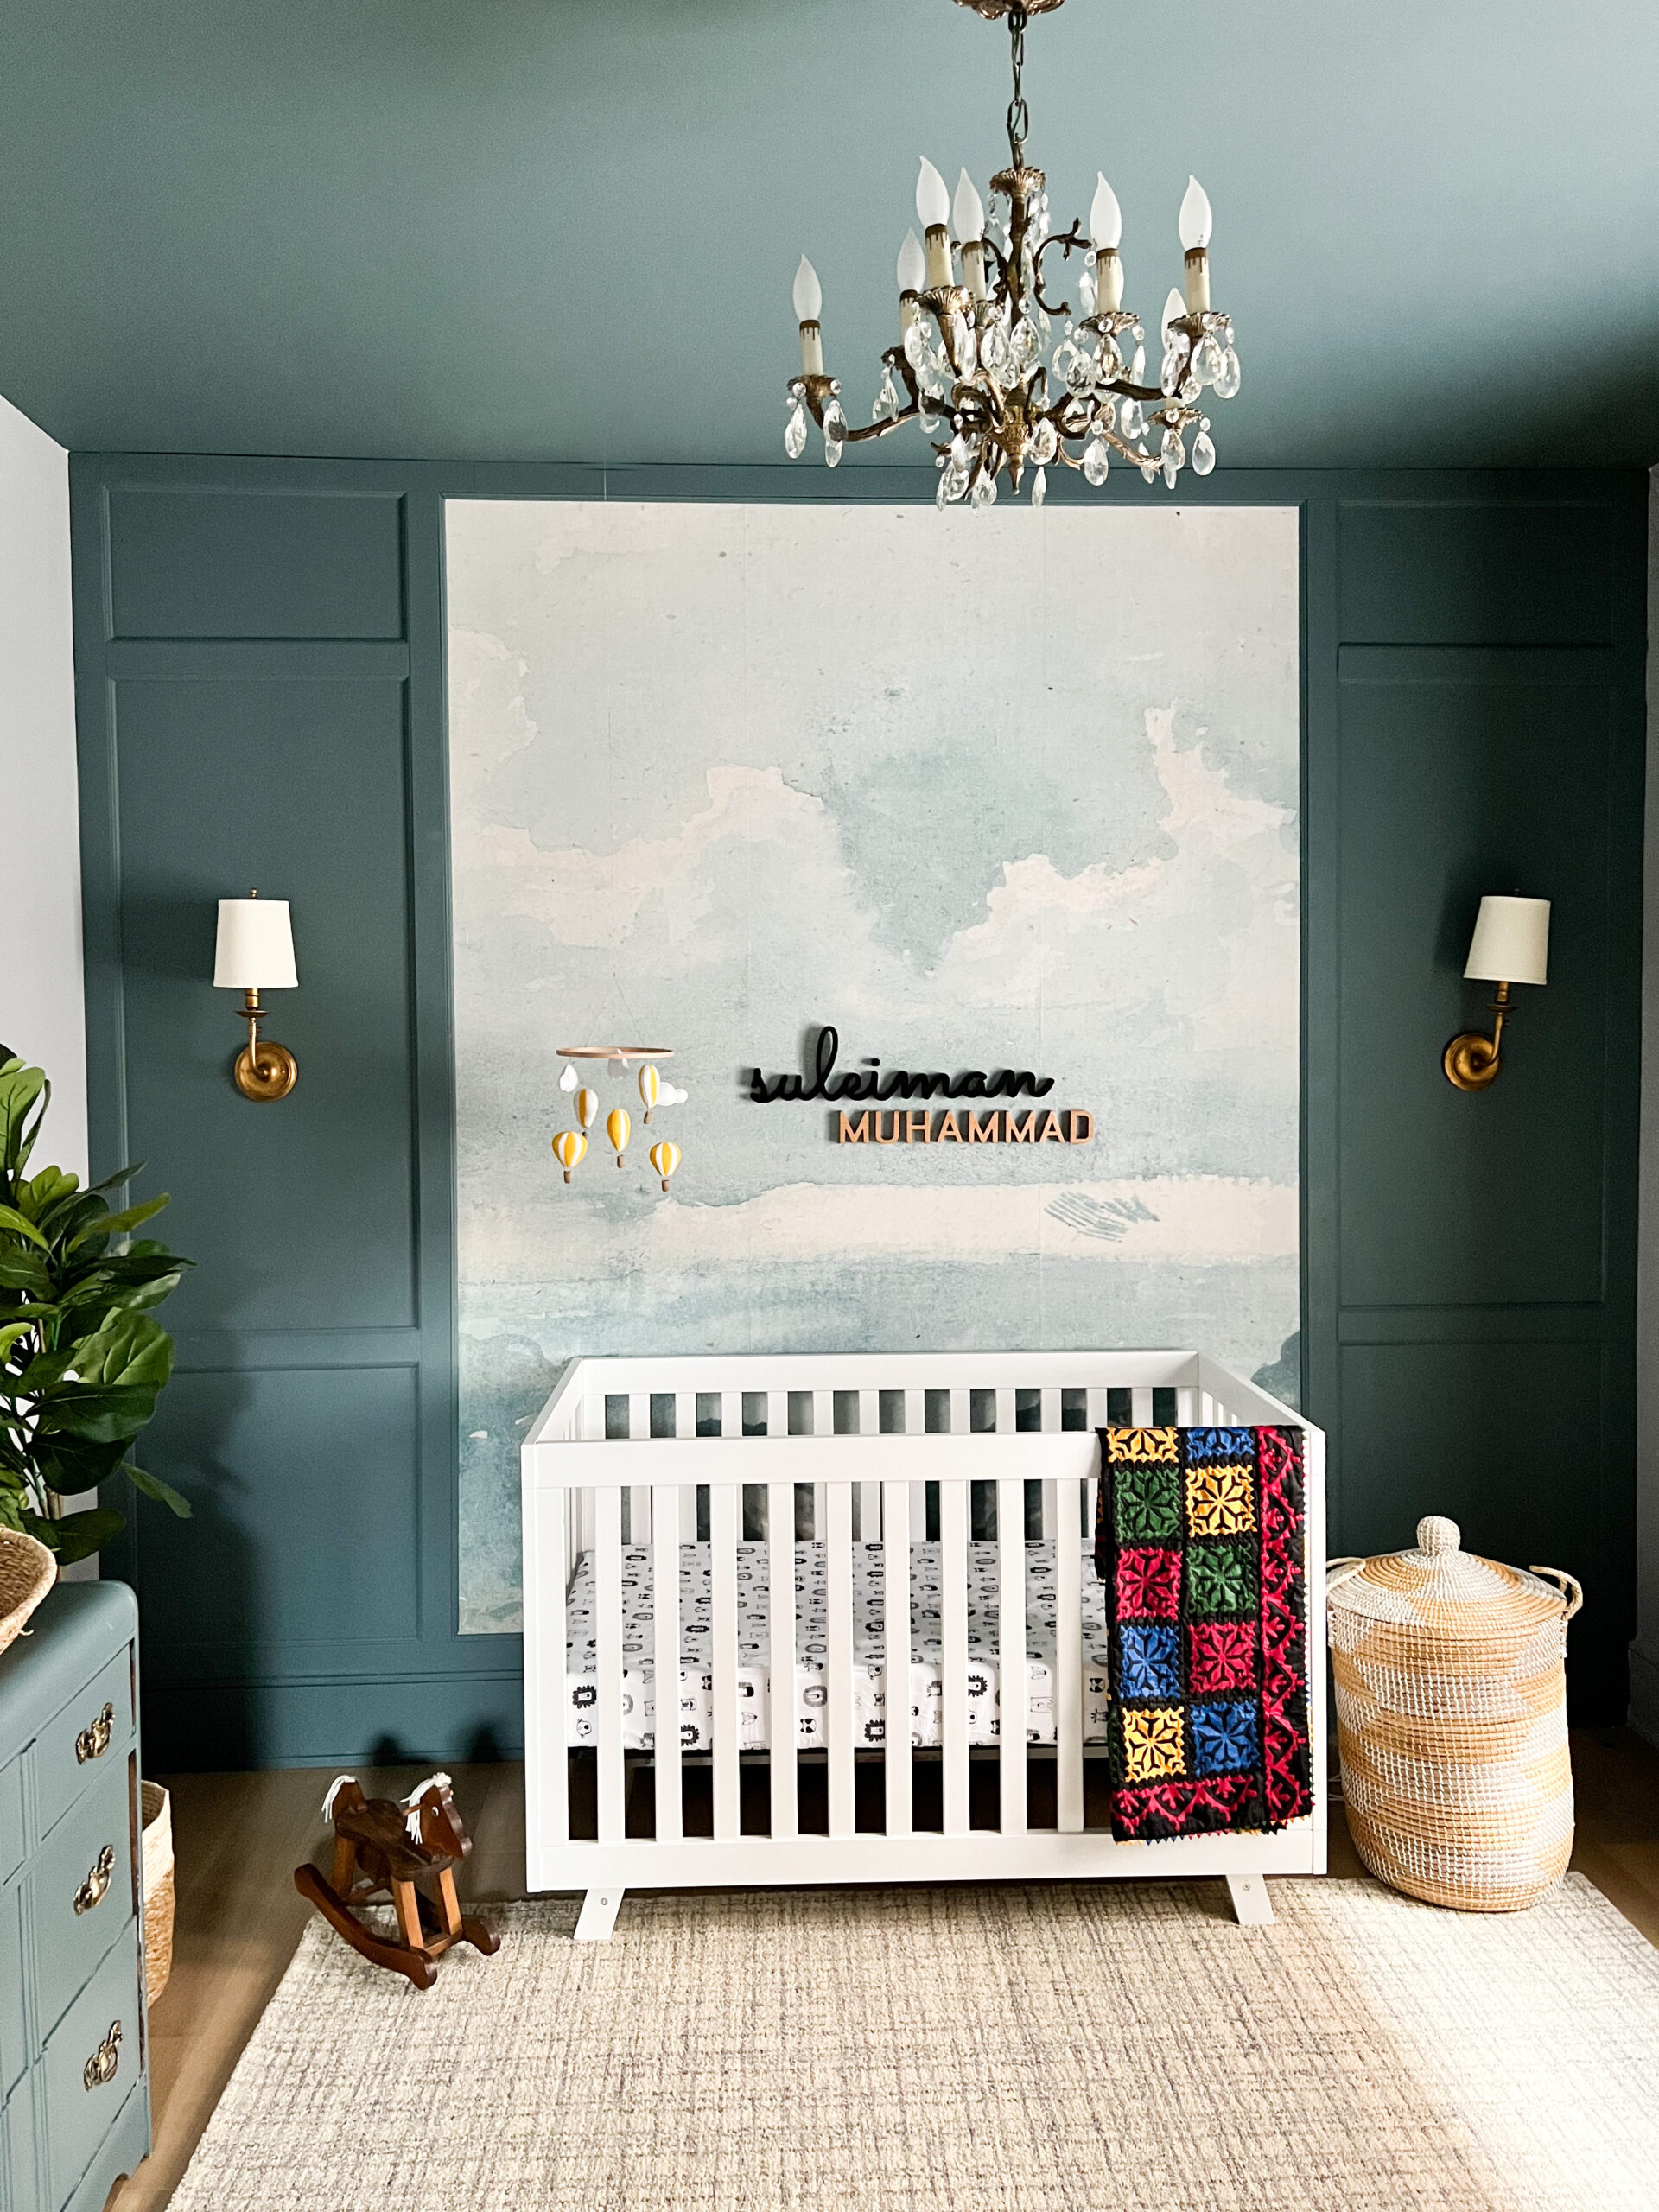 Bedroom Reveal: DIY Wallpaper Accent Wall - YesMissy